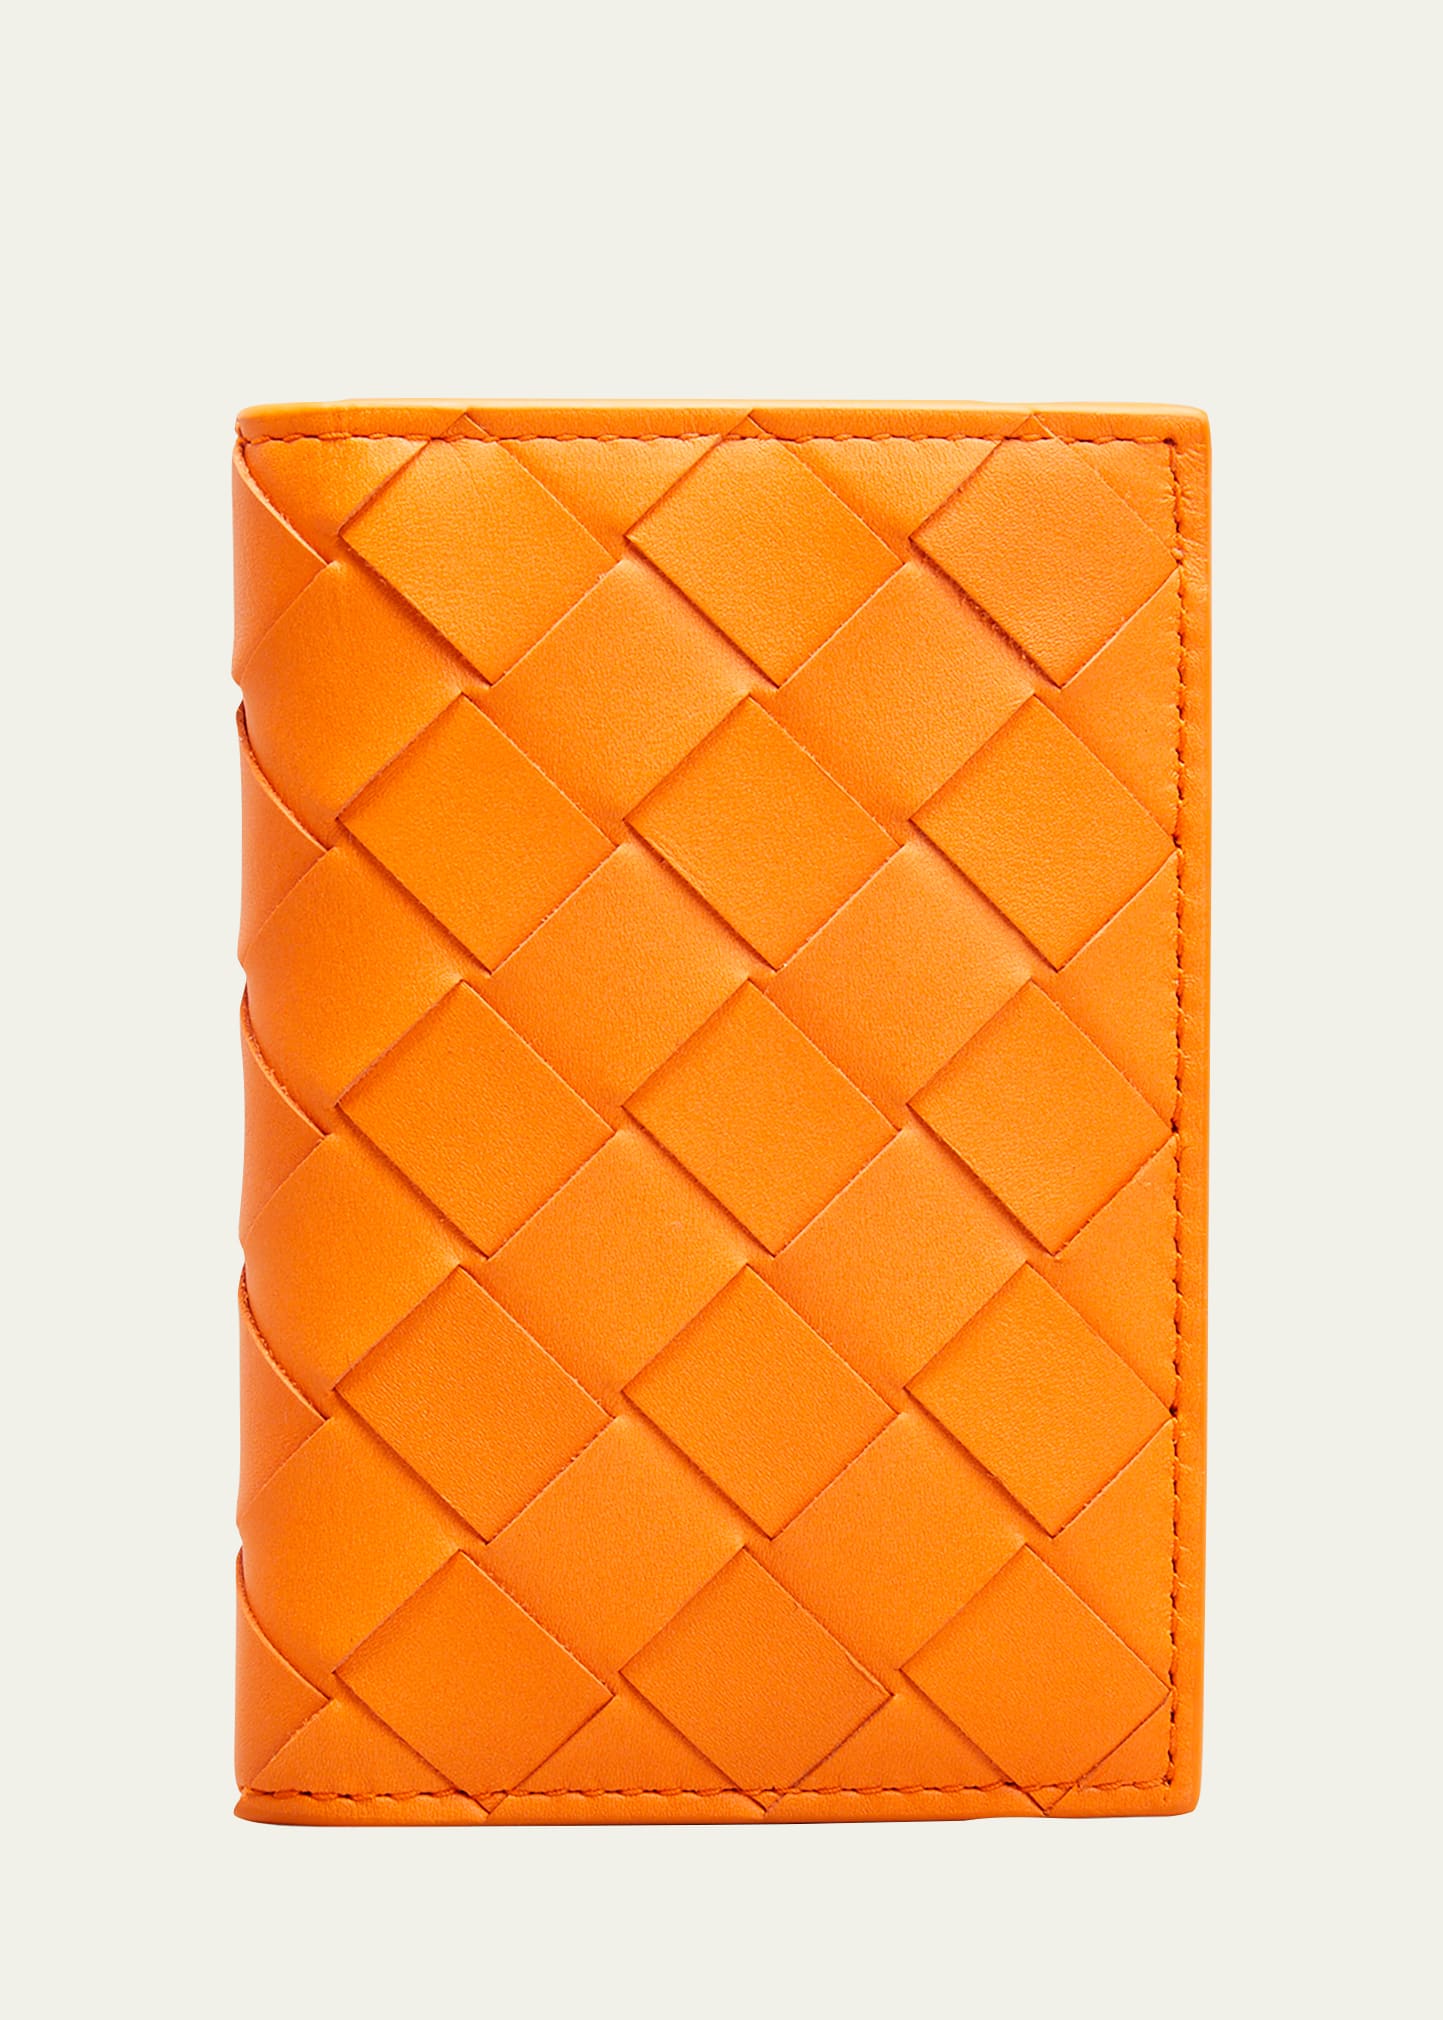 Bottega Veneta Men's Portacard Woven Leather Card Case In Sunset